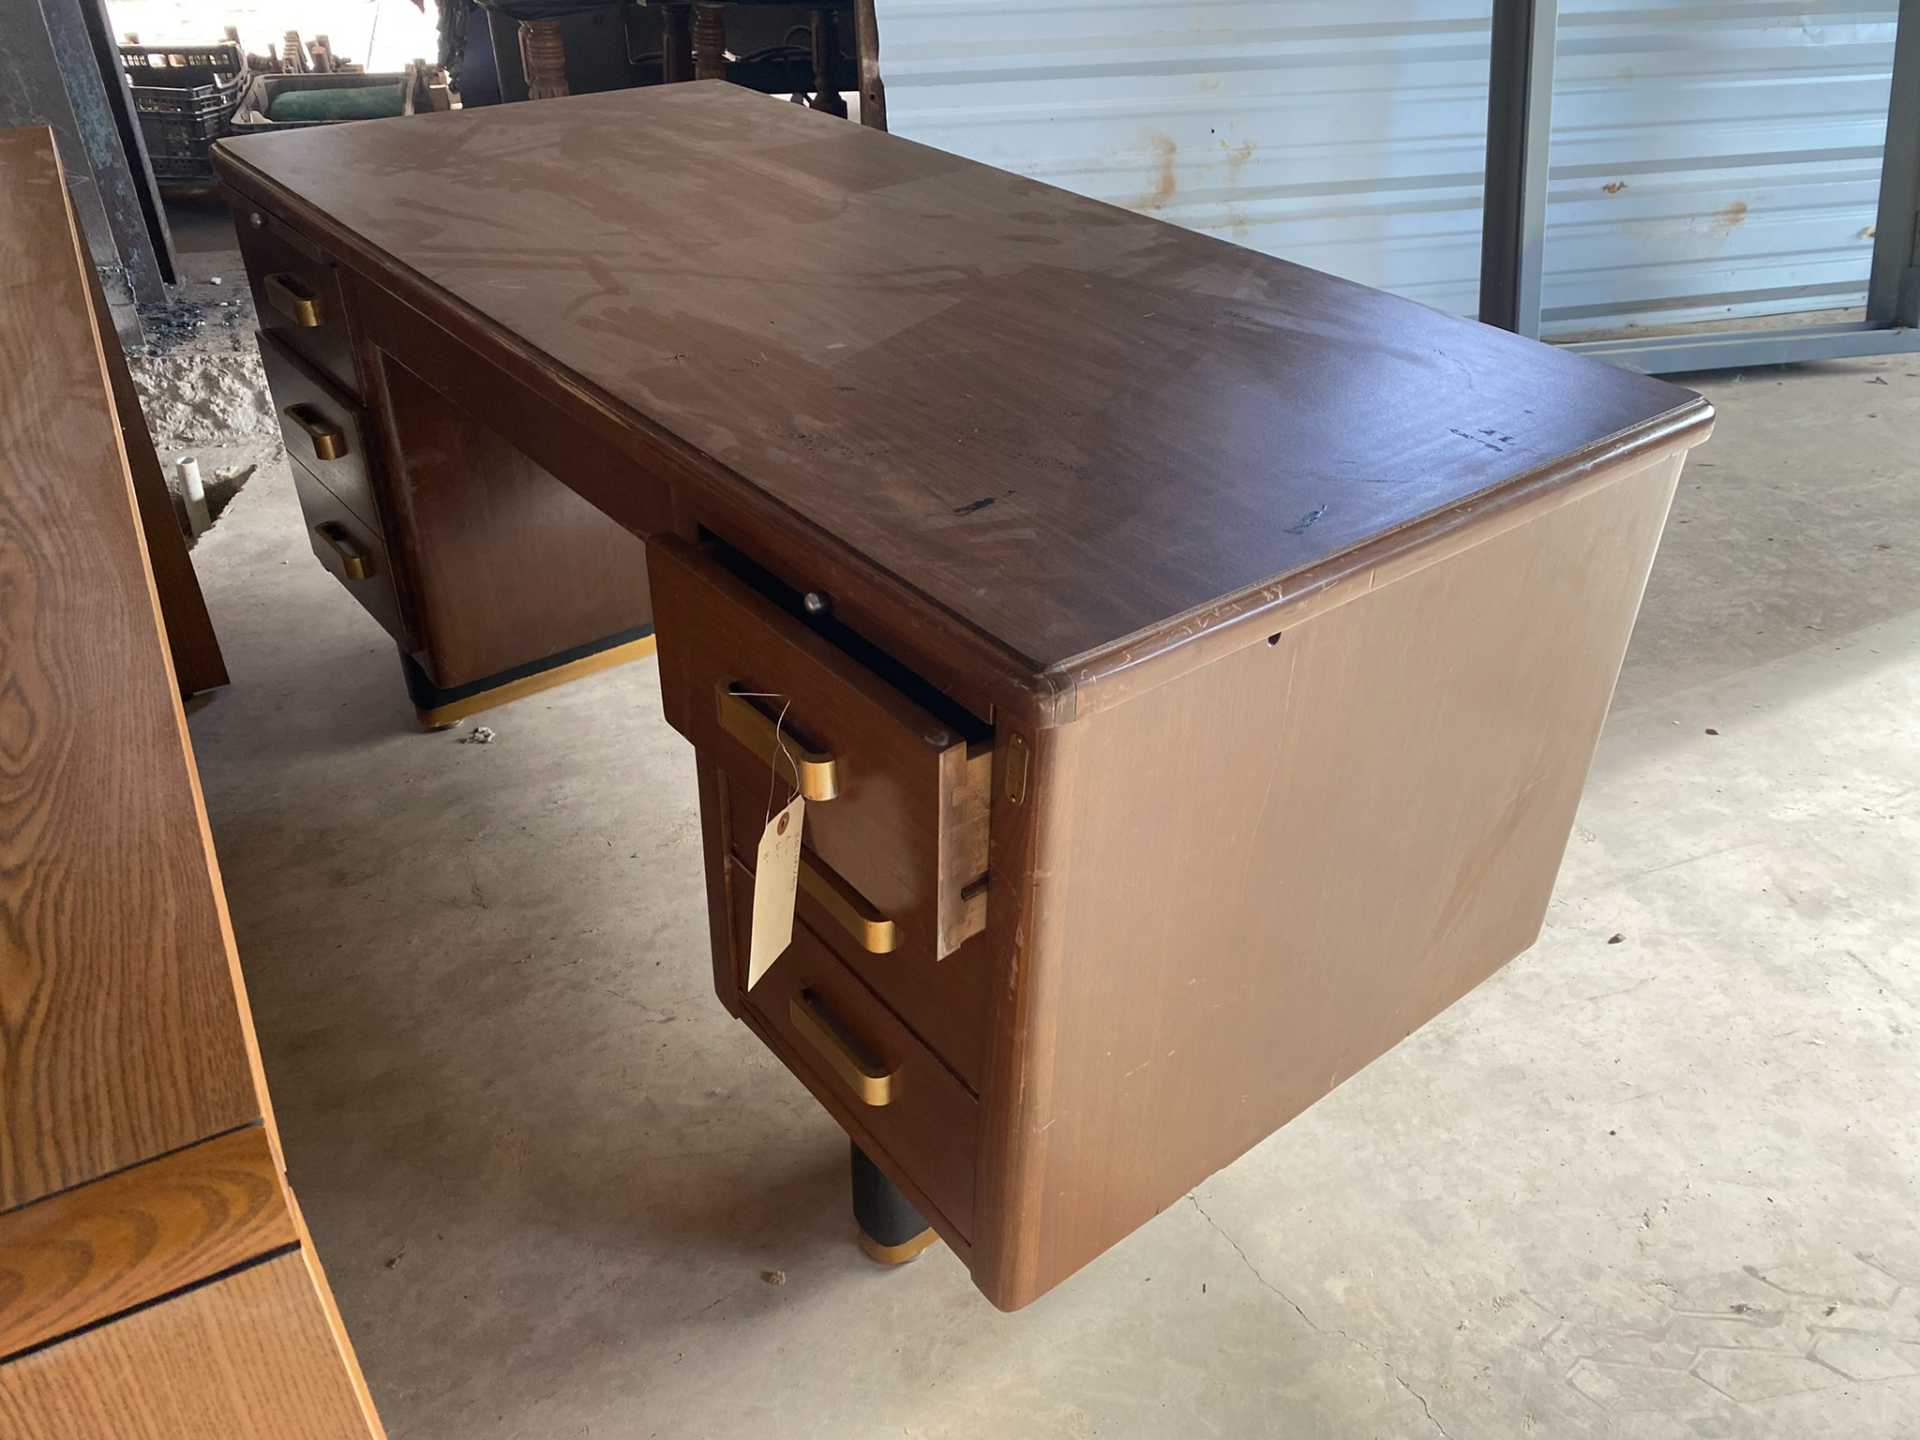 36 x 60" five drawer Desk